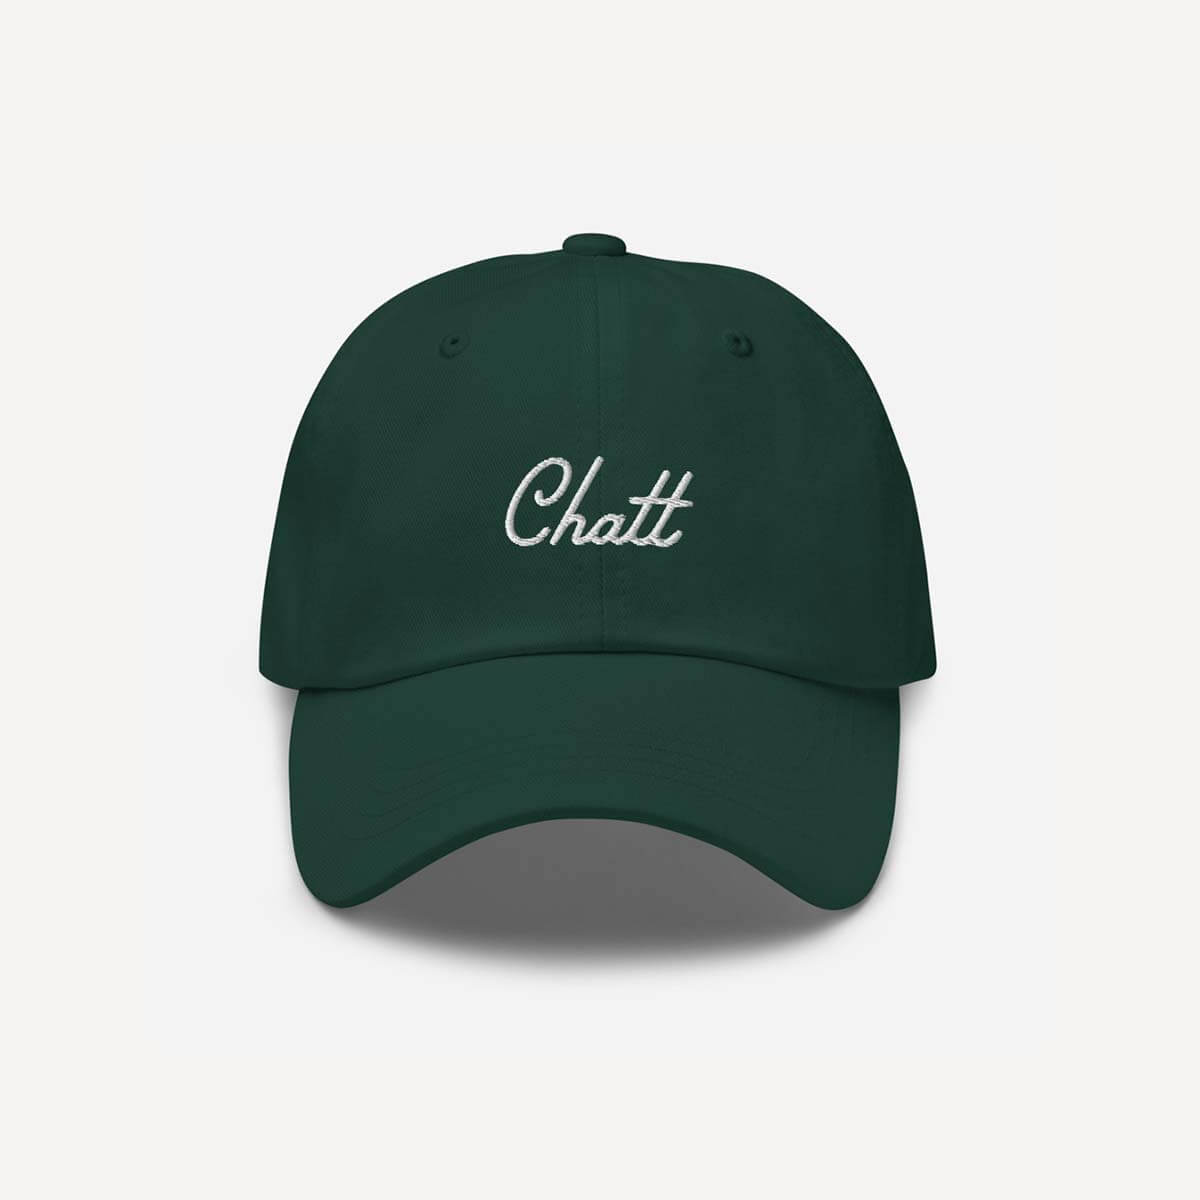 Sombrero de papá chat